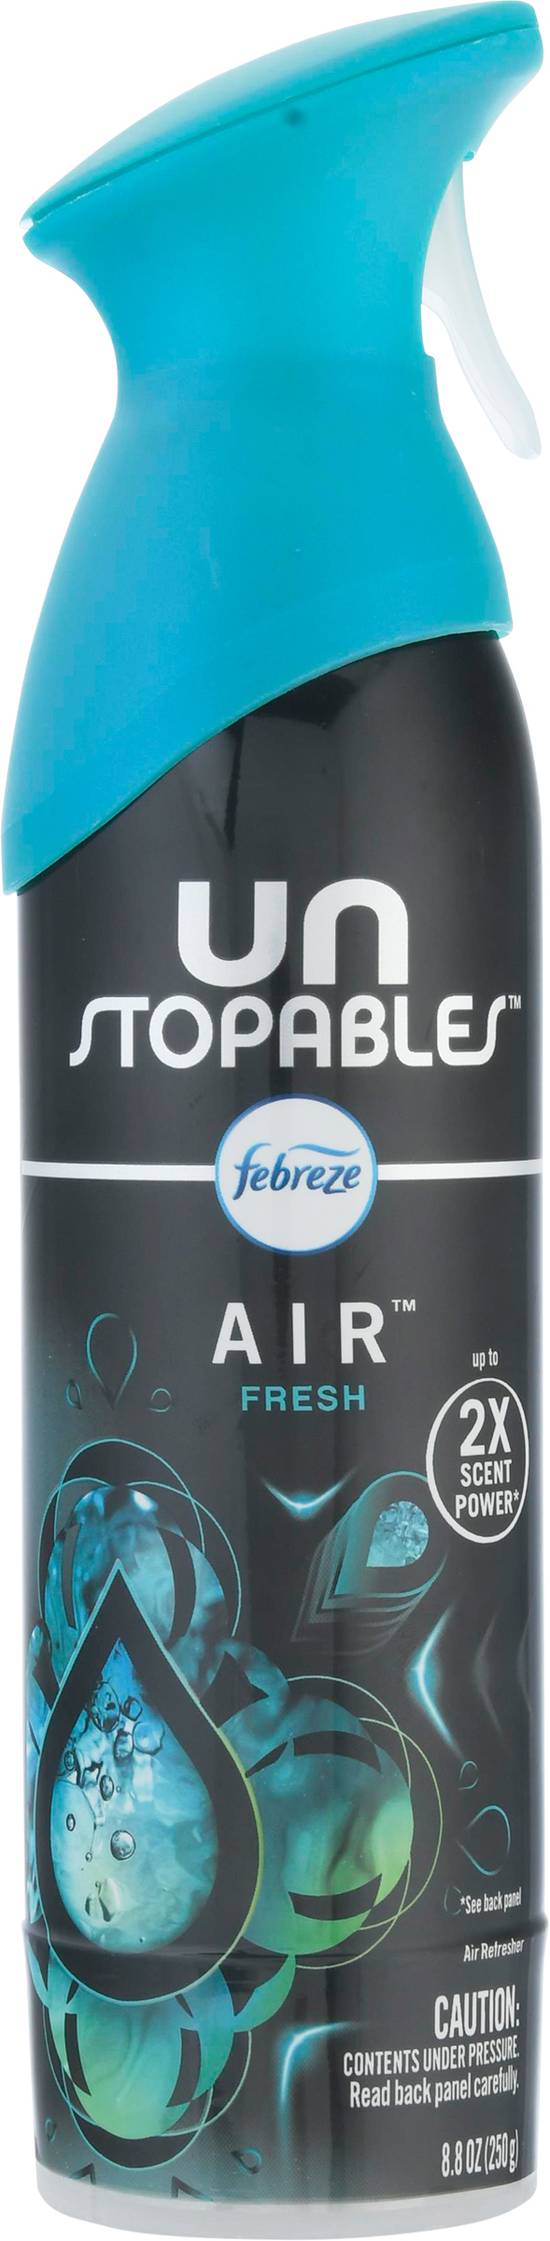 Febreze Air Fresh Unstopables Scent Air Freshener